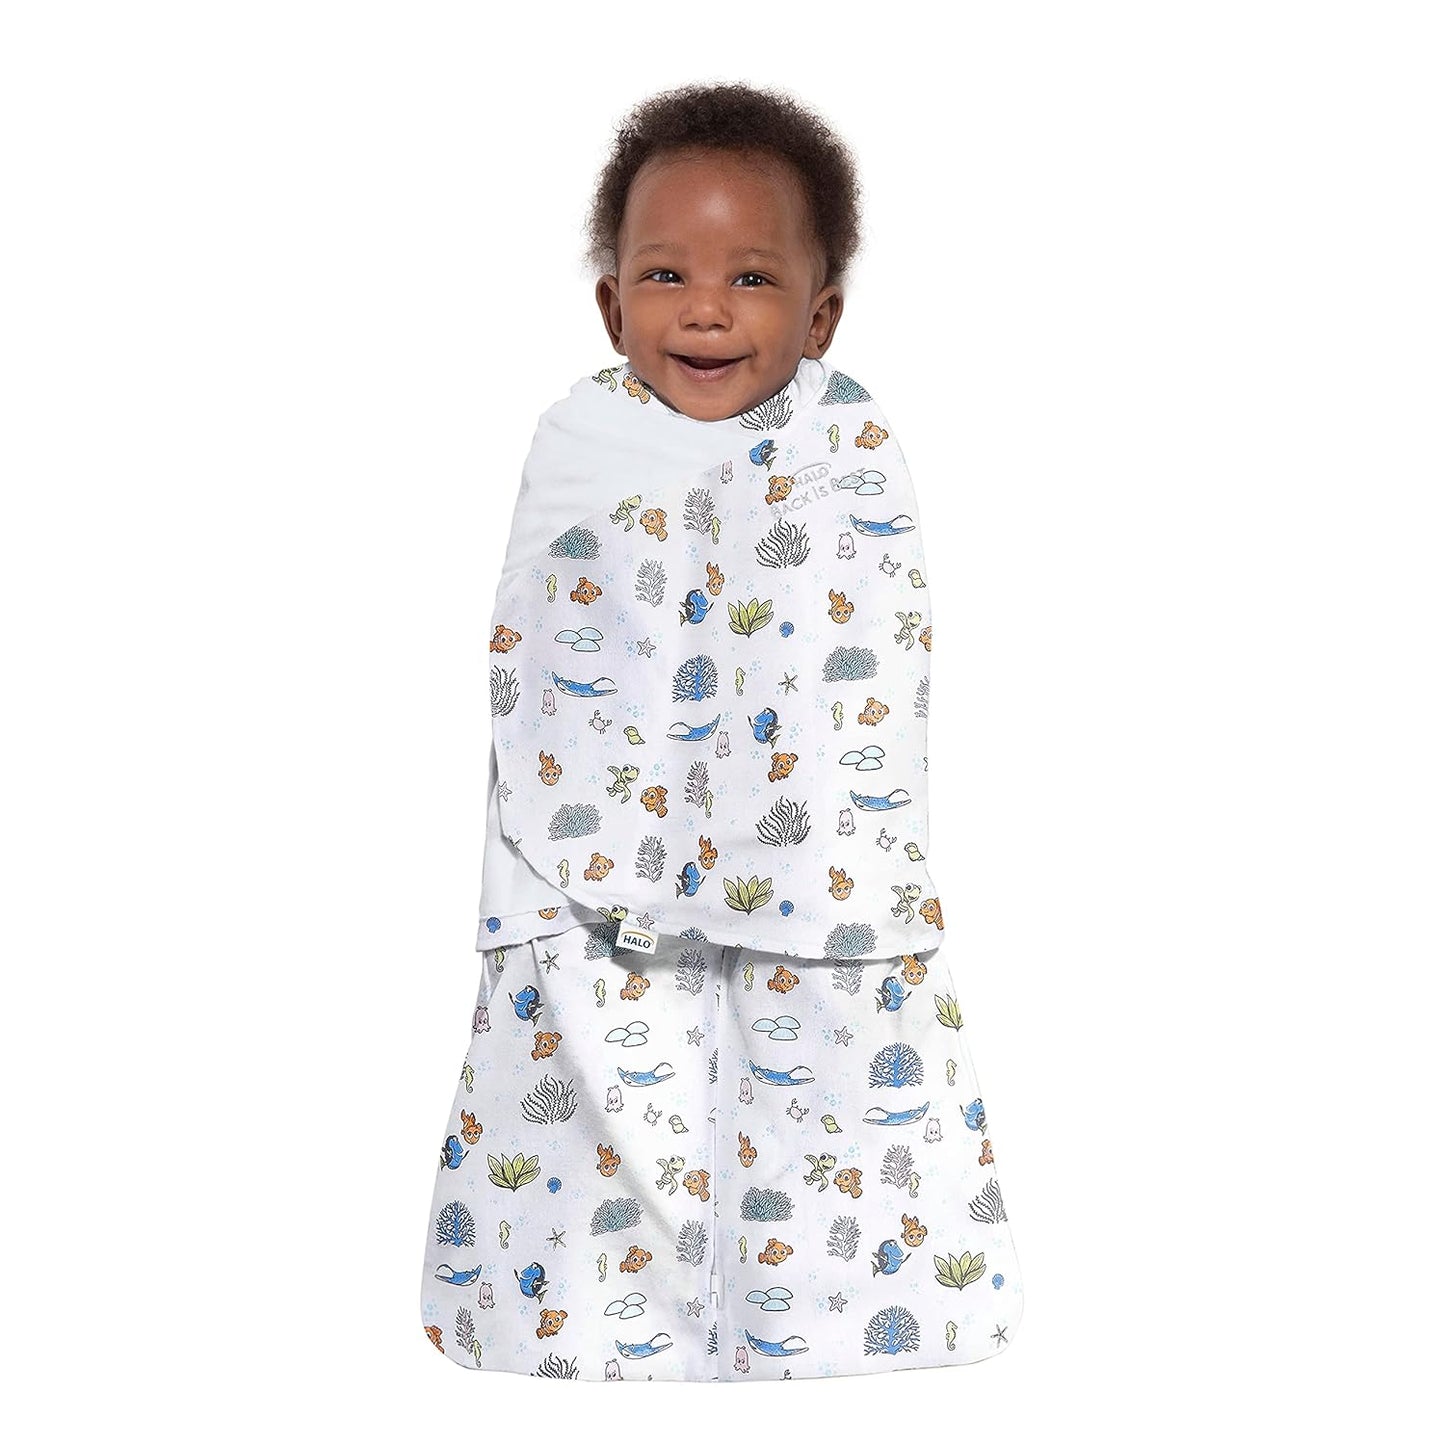 HALO 100% Cotton Sleepsack Swaddle, 3-Way Adjustable Wearable Blanket, TOG 1.5, Clouds, Newborn, 0-3 Months